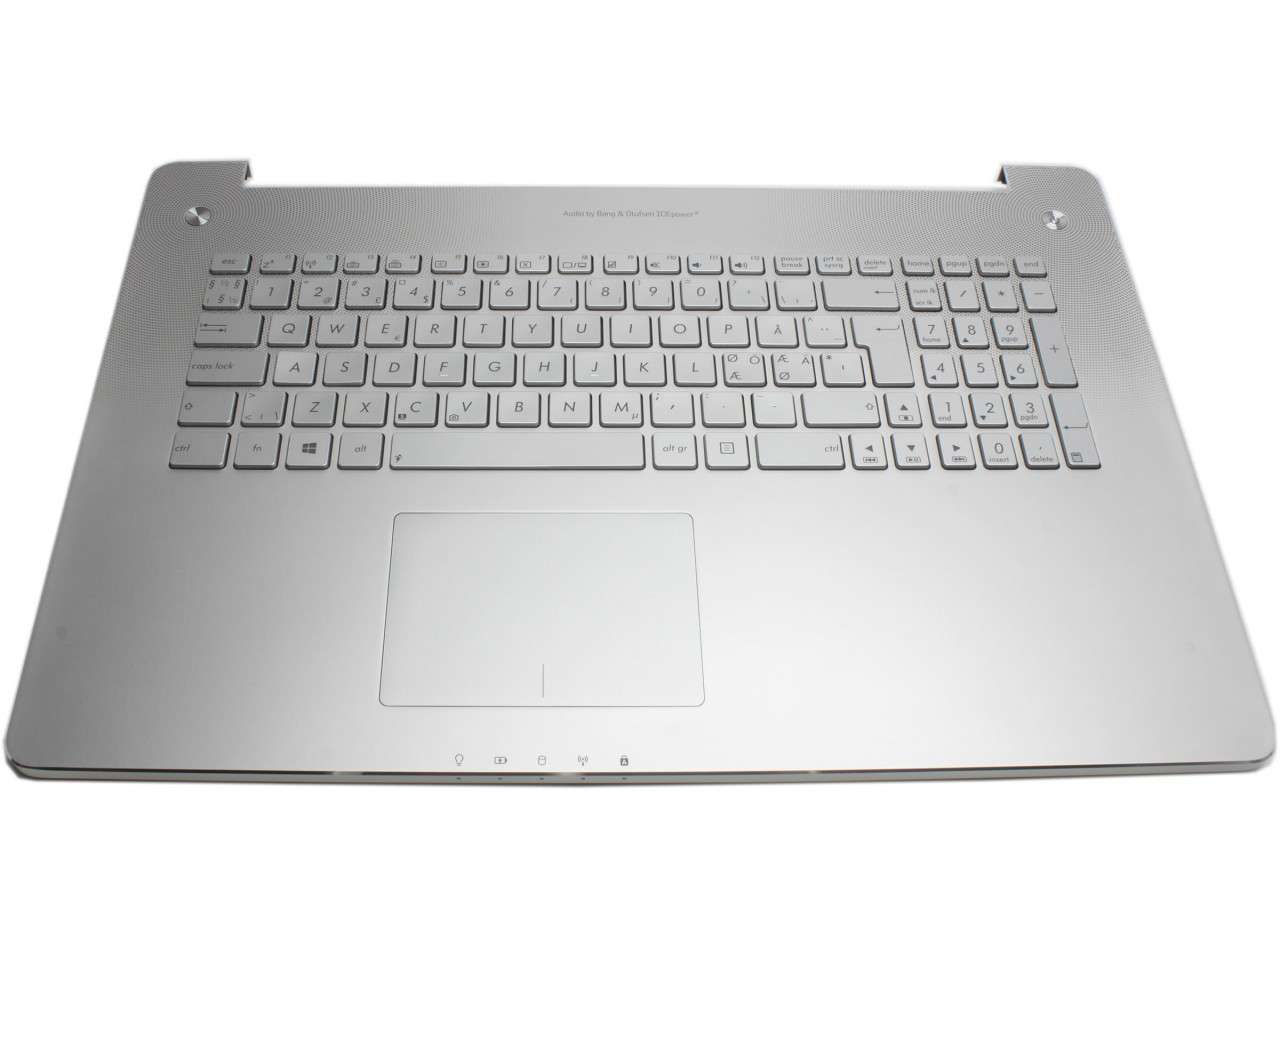 Tastatura Asus N750J argintie cu Palmrest argintiu iluminata backlit argintie